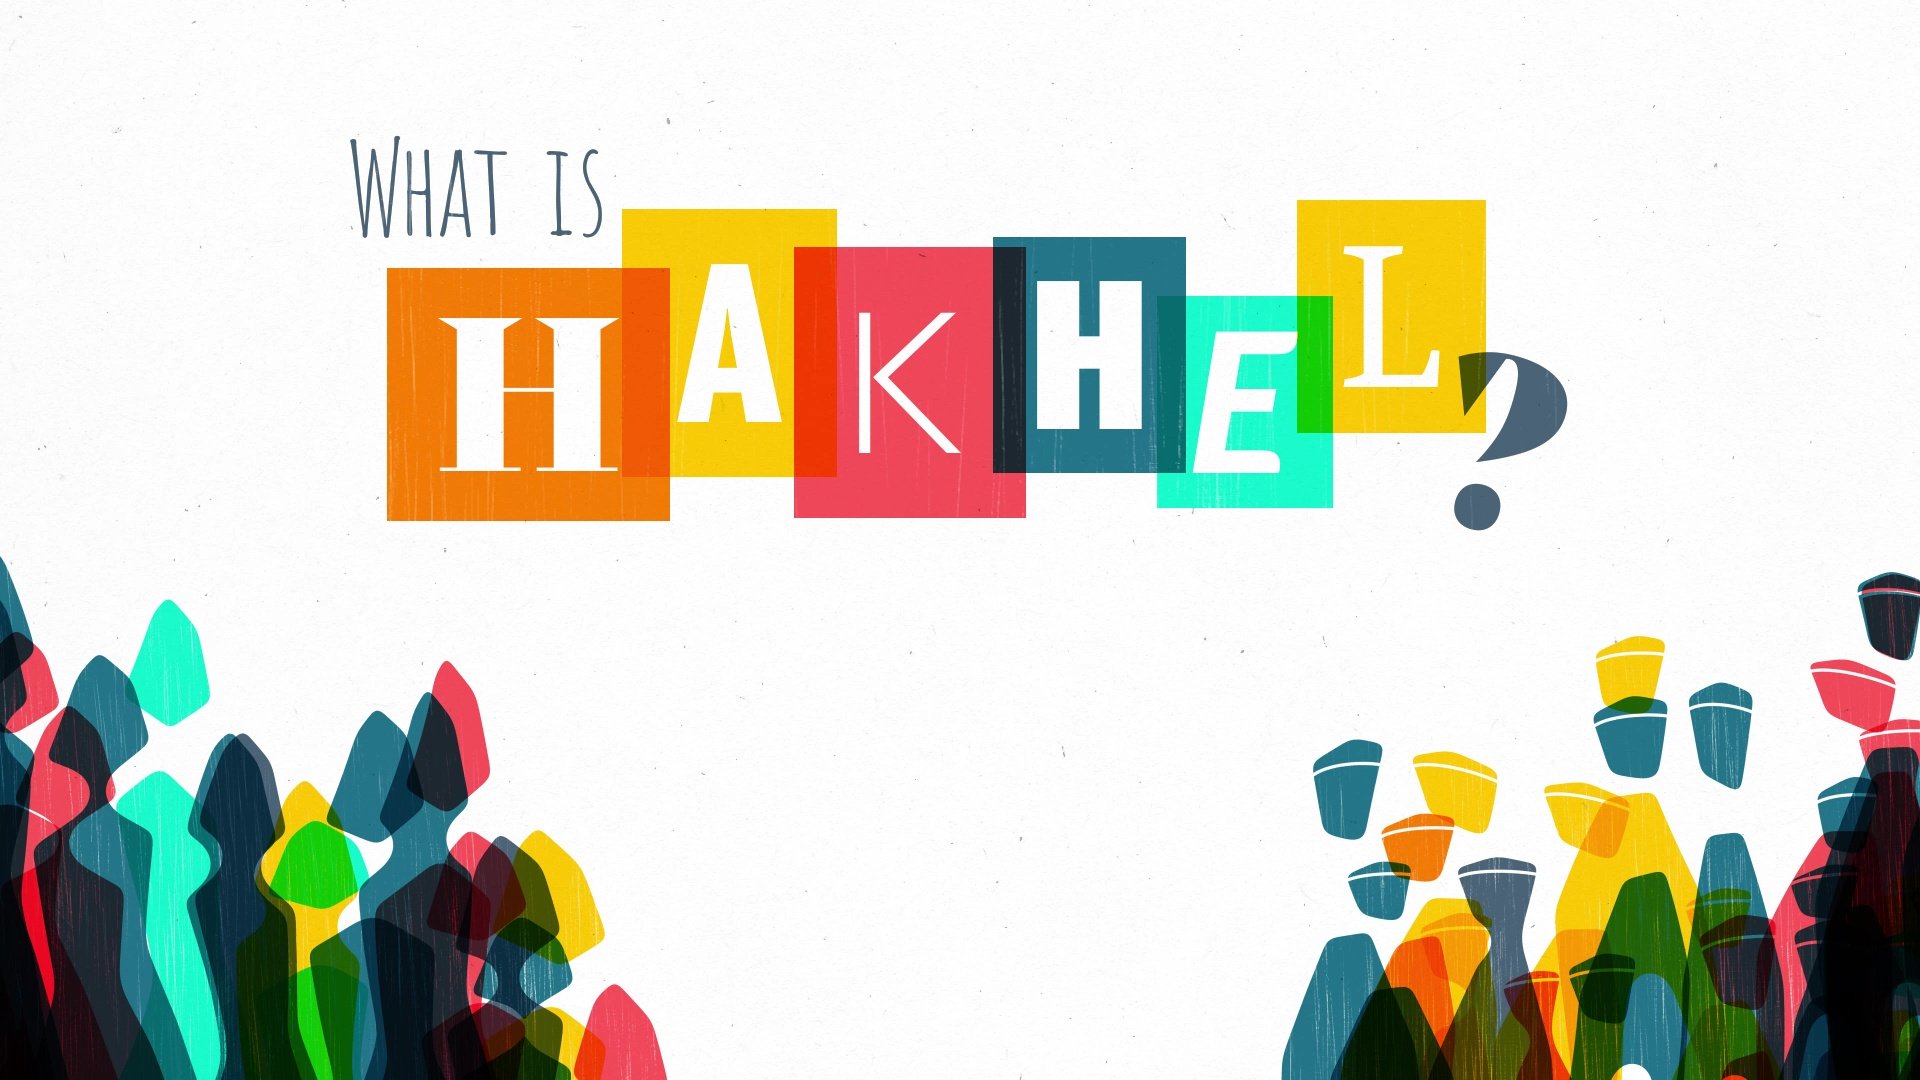 What Is Hakhel?